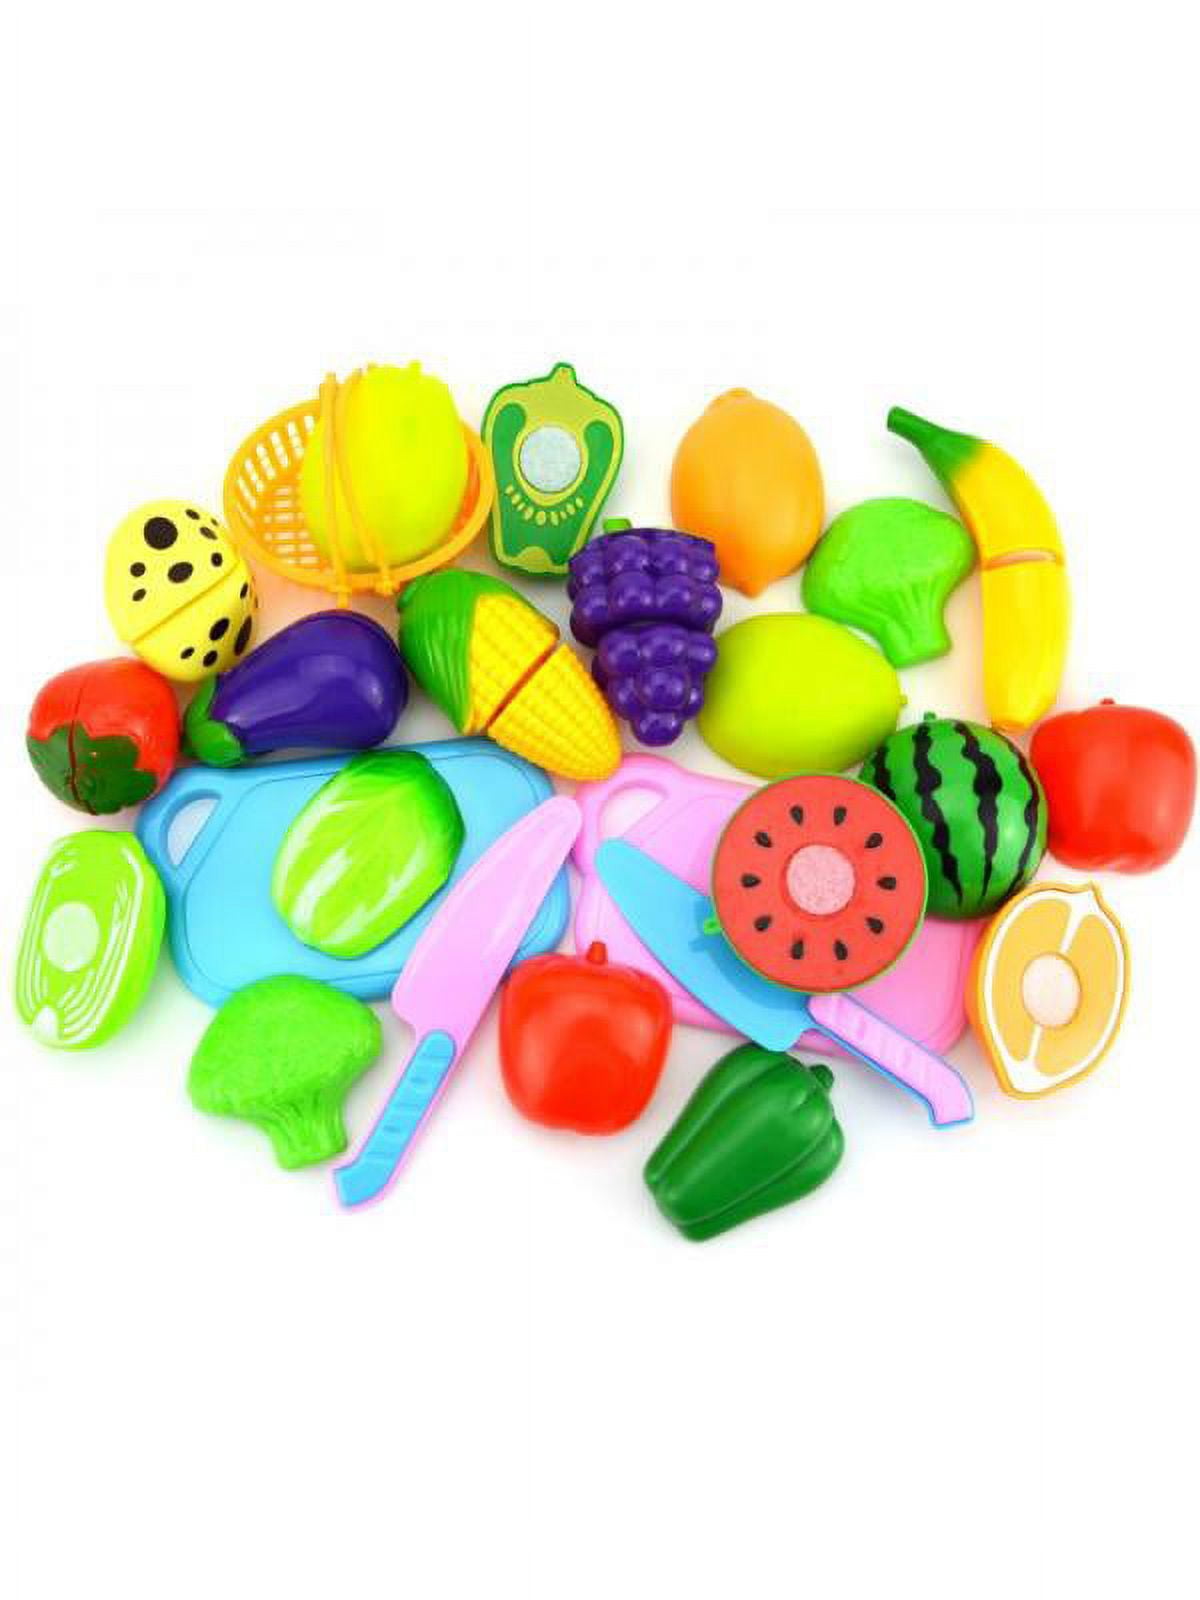 Topumt 4-18pcs Pretend Role Play Kitchen Fruit Vegetable Food Toy ...